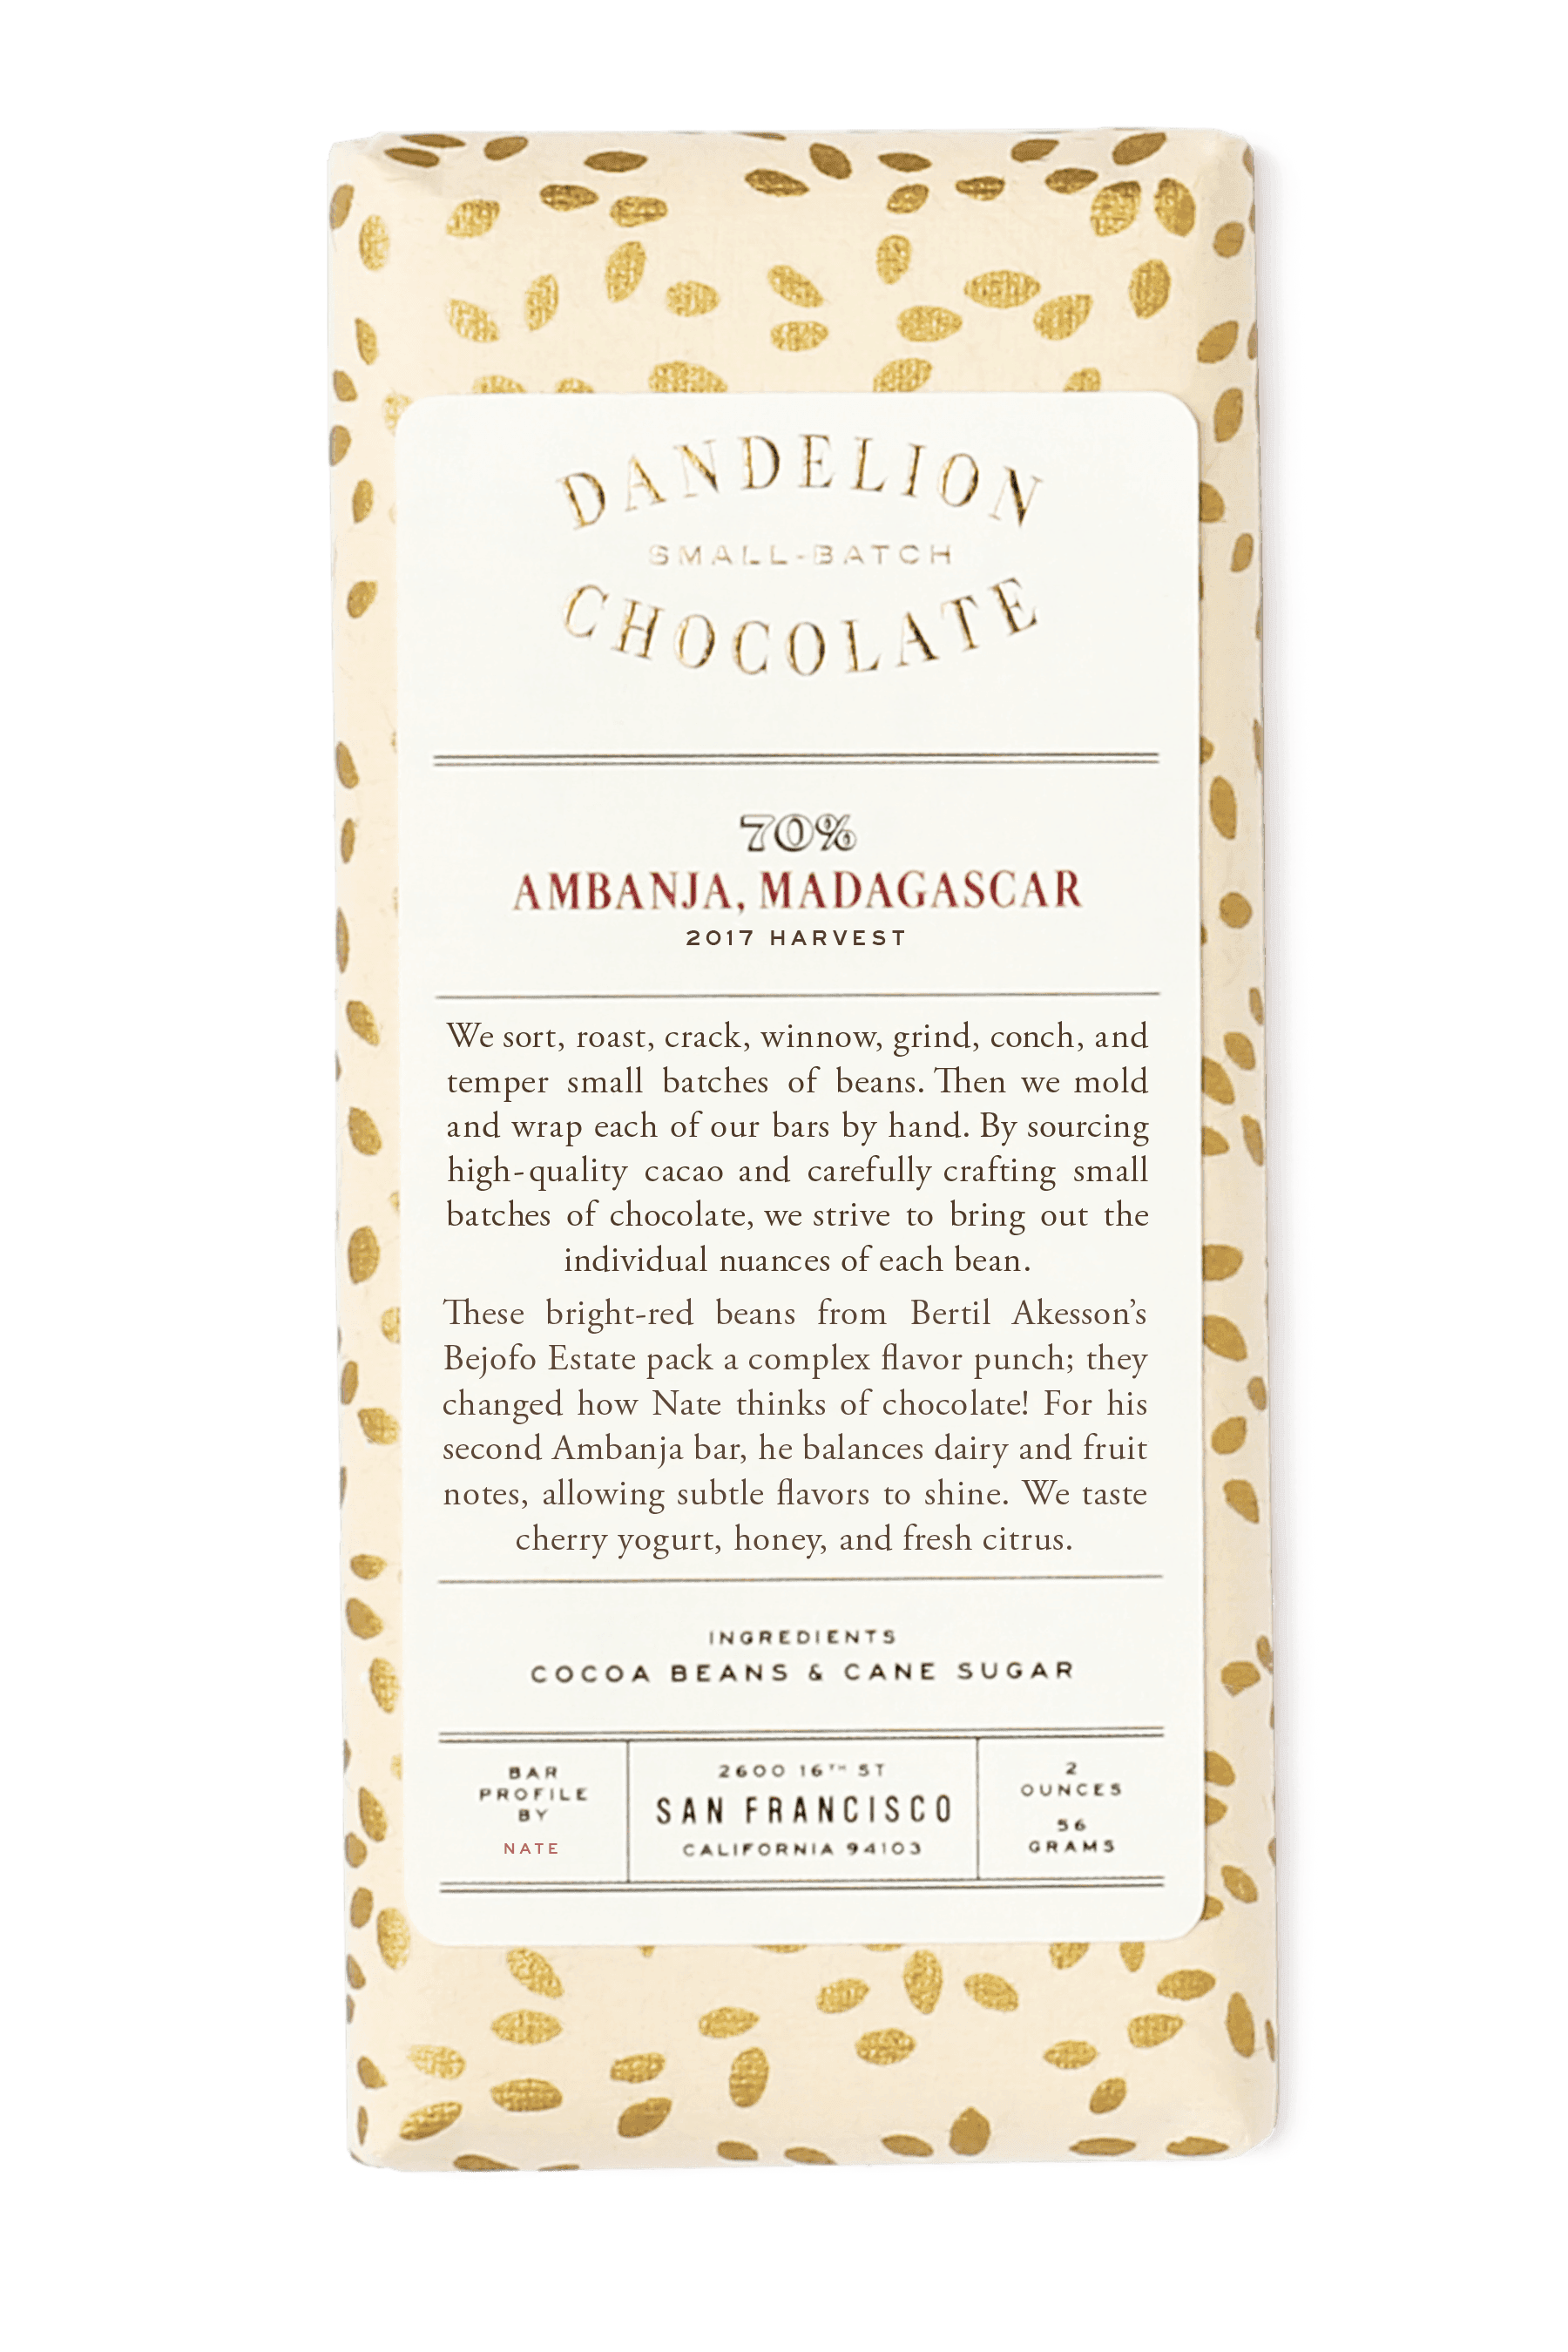 Dandelion Chocolate Ambanja, Madagascar 70% 2017 Harvest Single-Origin Chocolate Bar